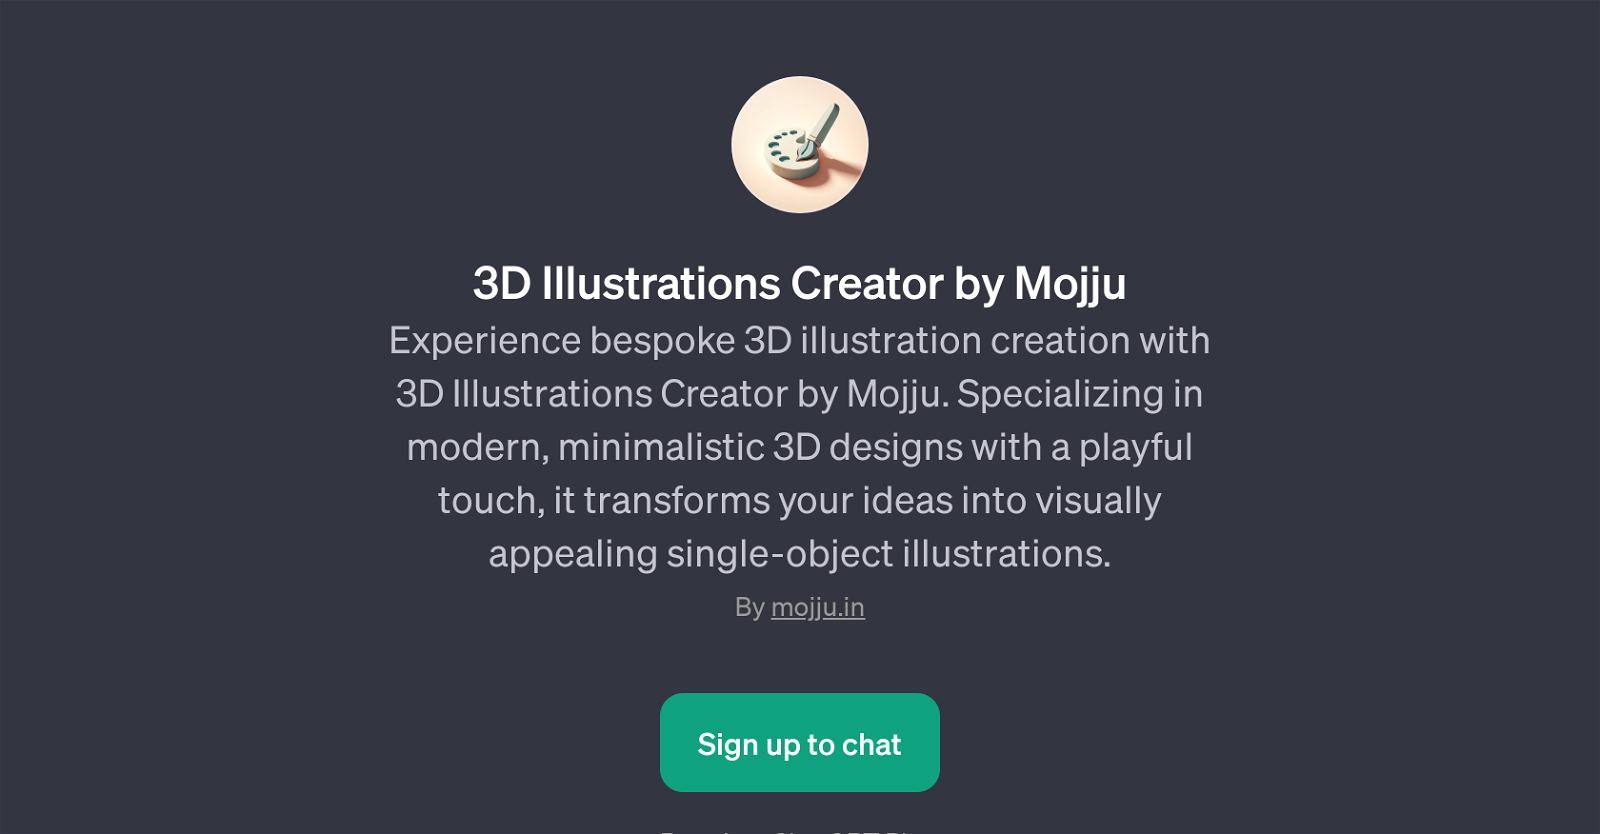 3D Illustrations Creator by Mojju website